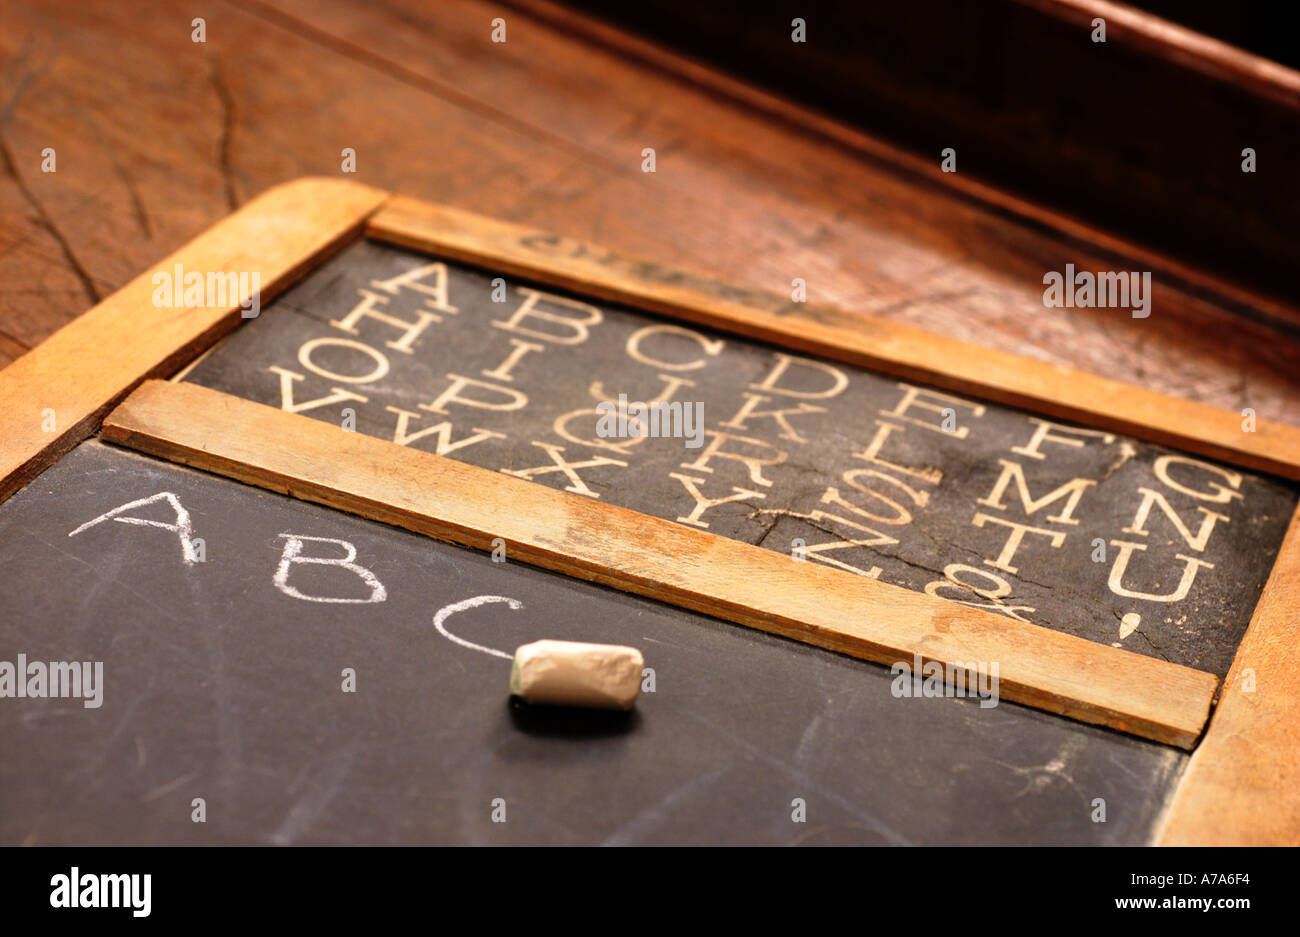 antique school chalkboard with ABC s written on it Stock Photo